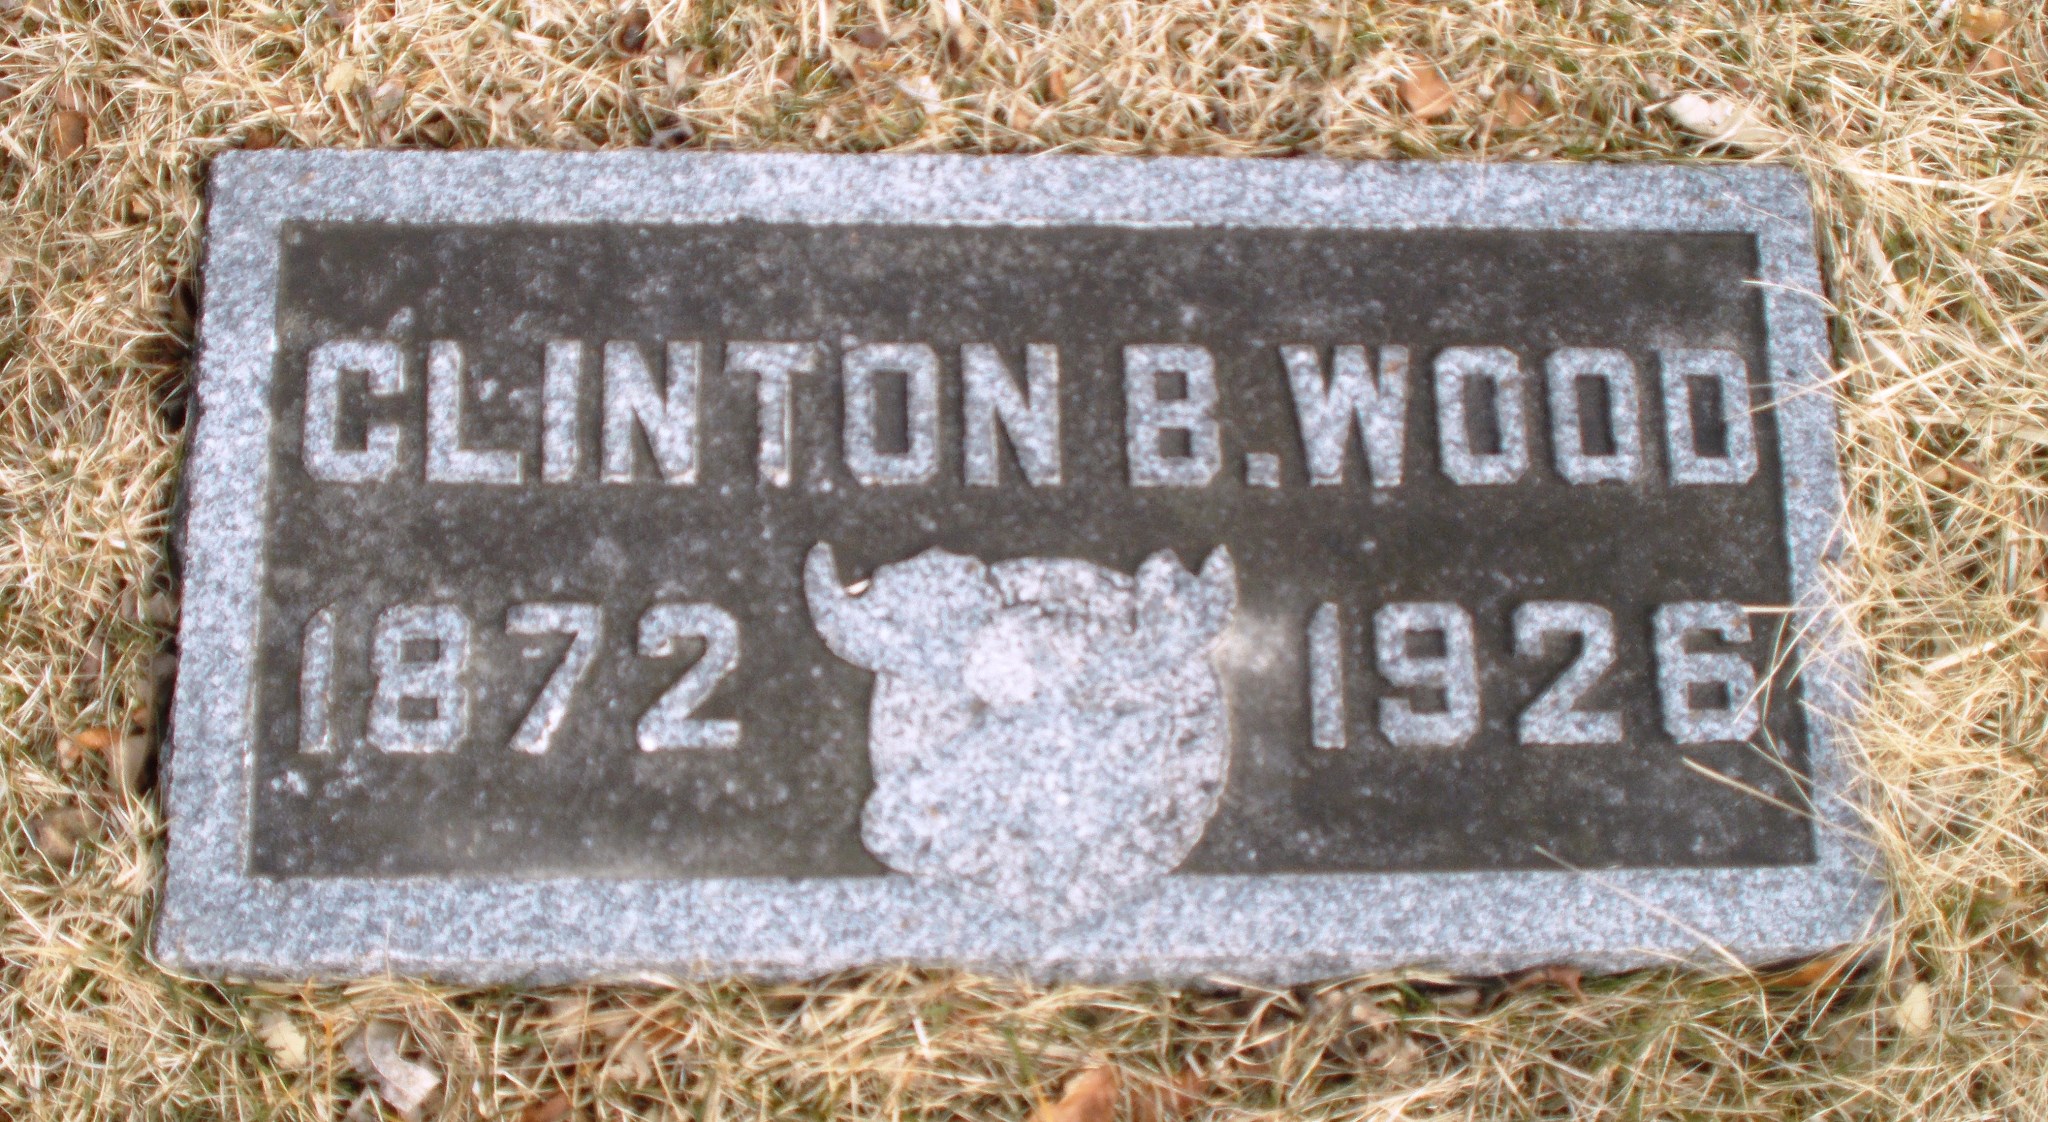 Clinton B Wood